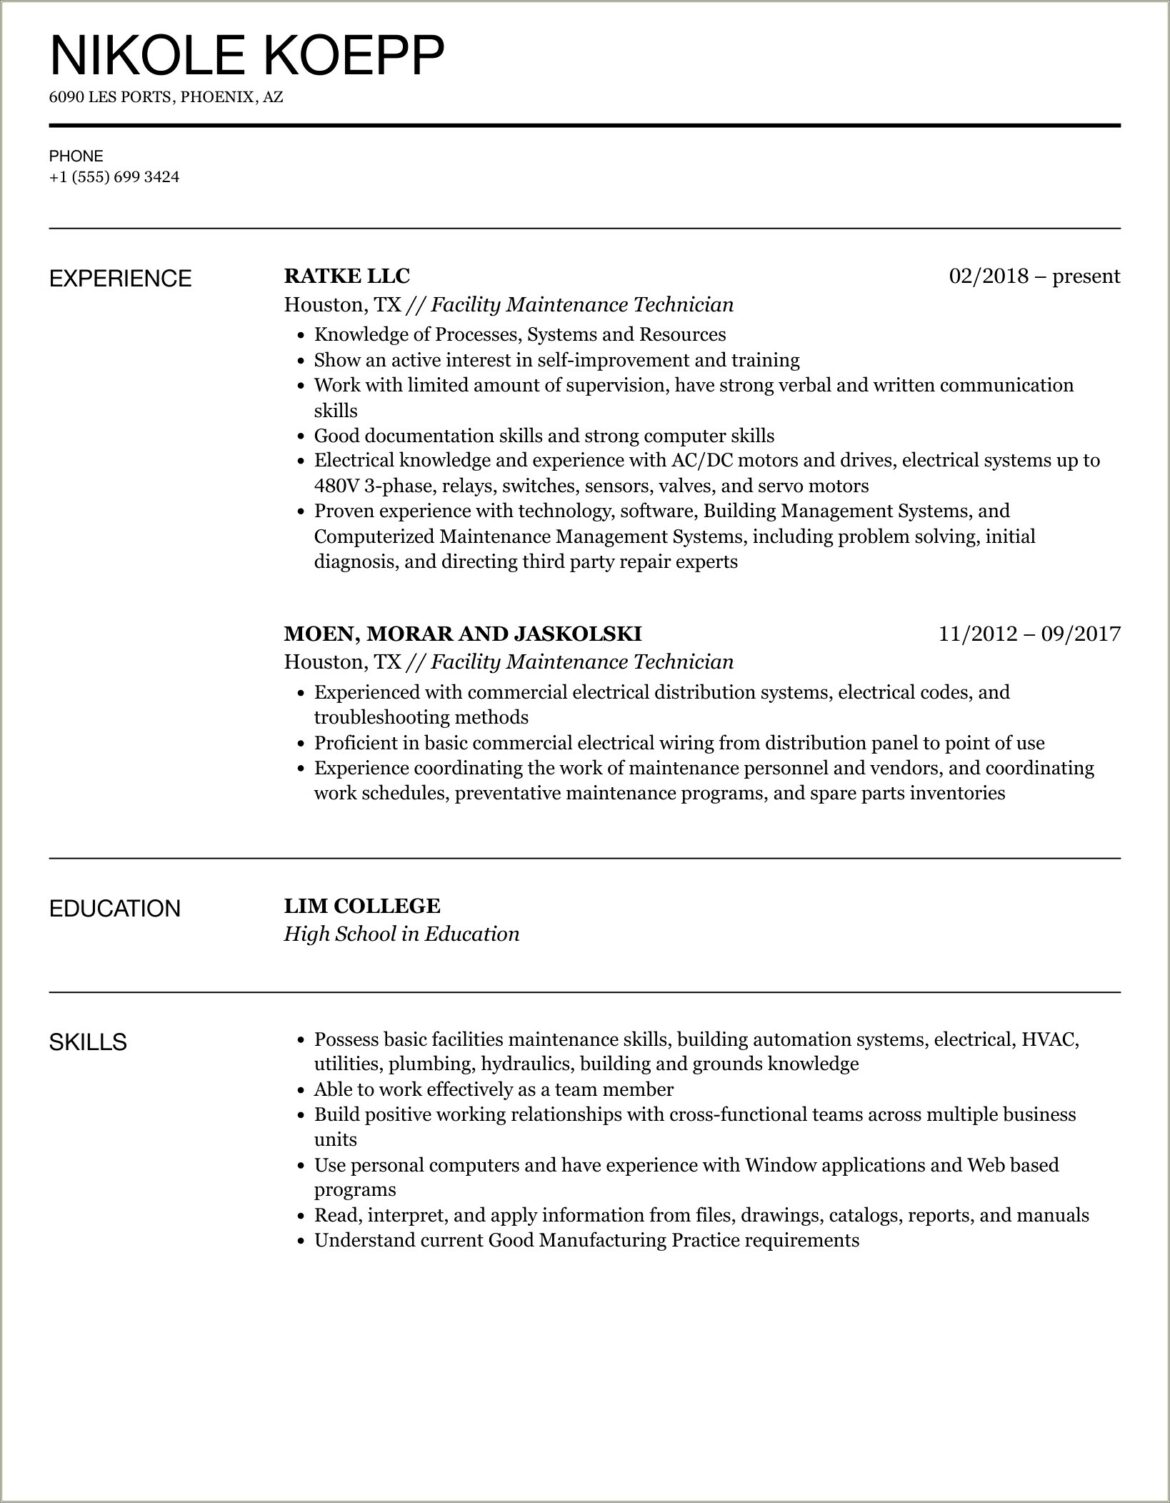 Sample Resume Of A Maintenance Technician